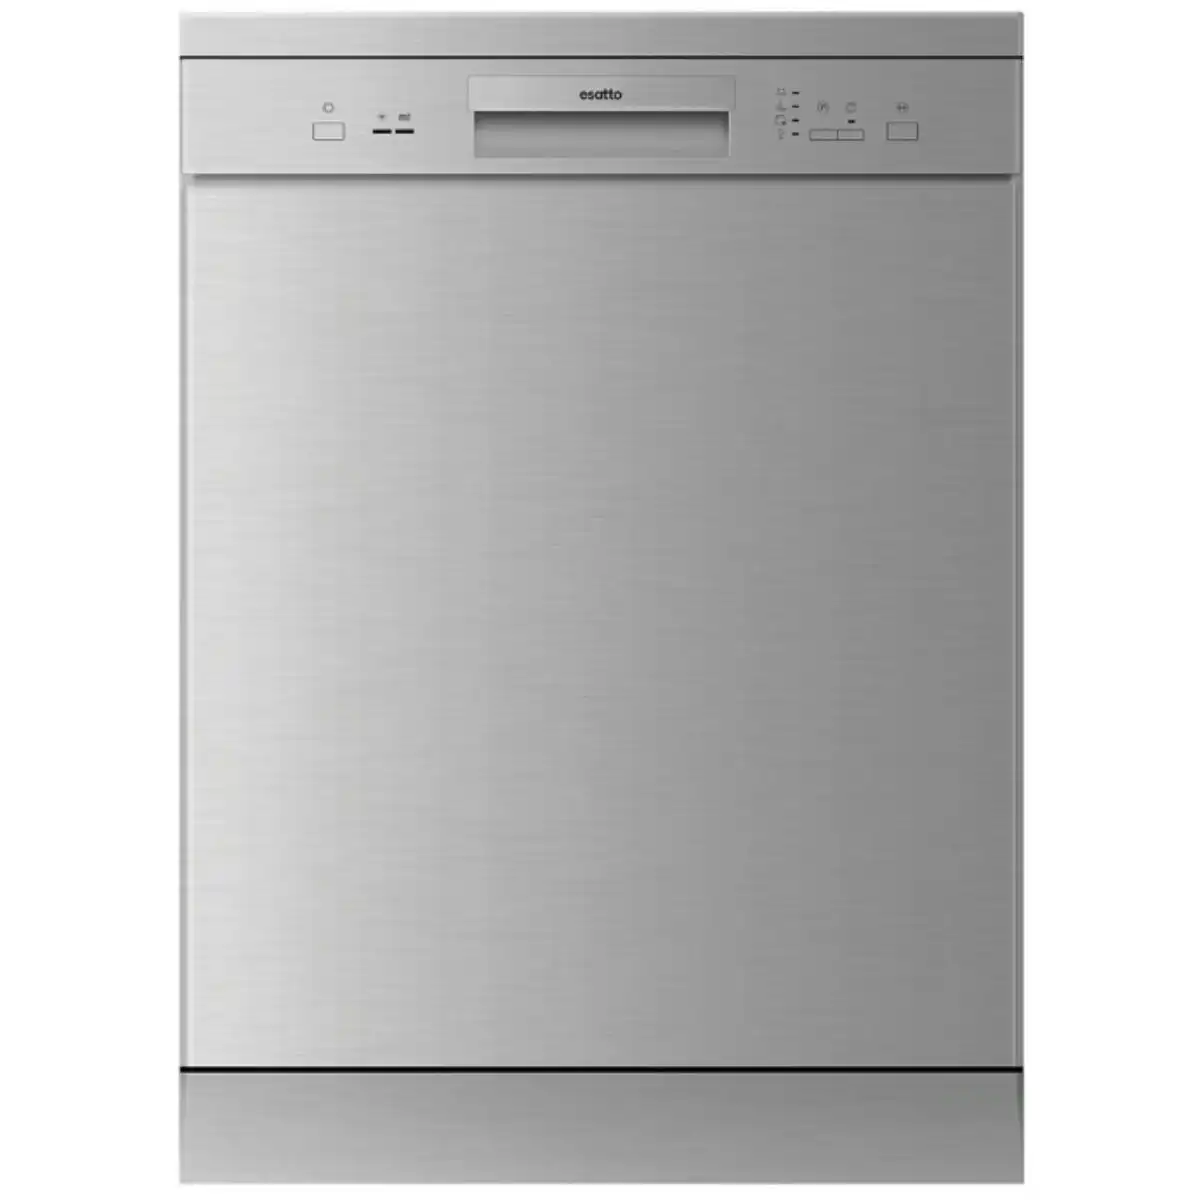 Esatto 60cm Freestanding Stainless Finish Dishwasher